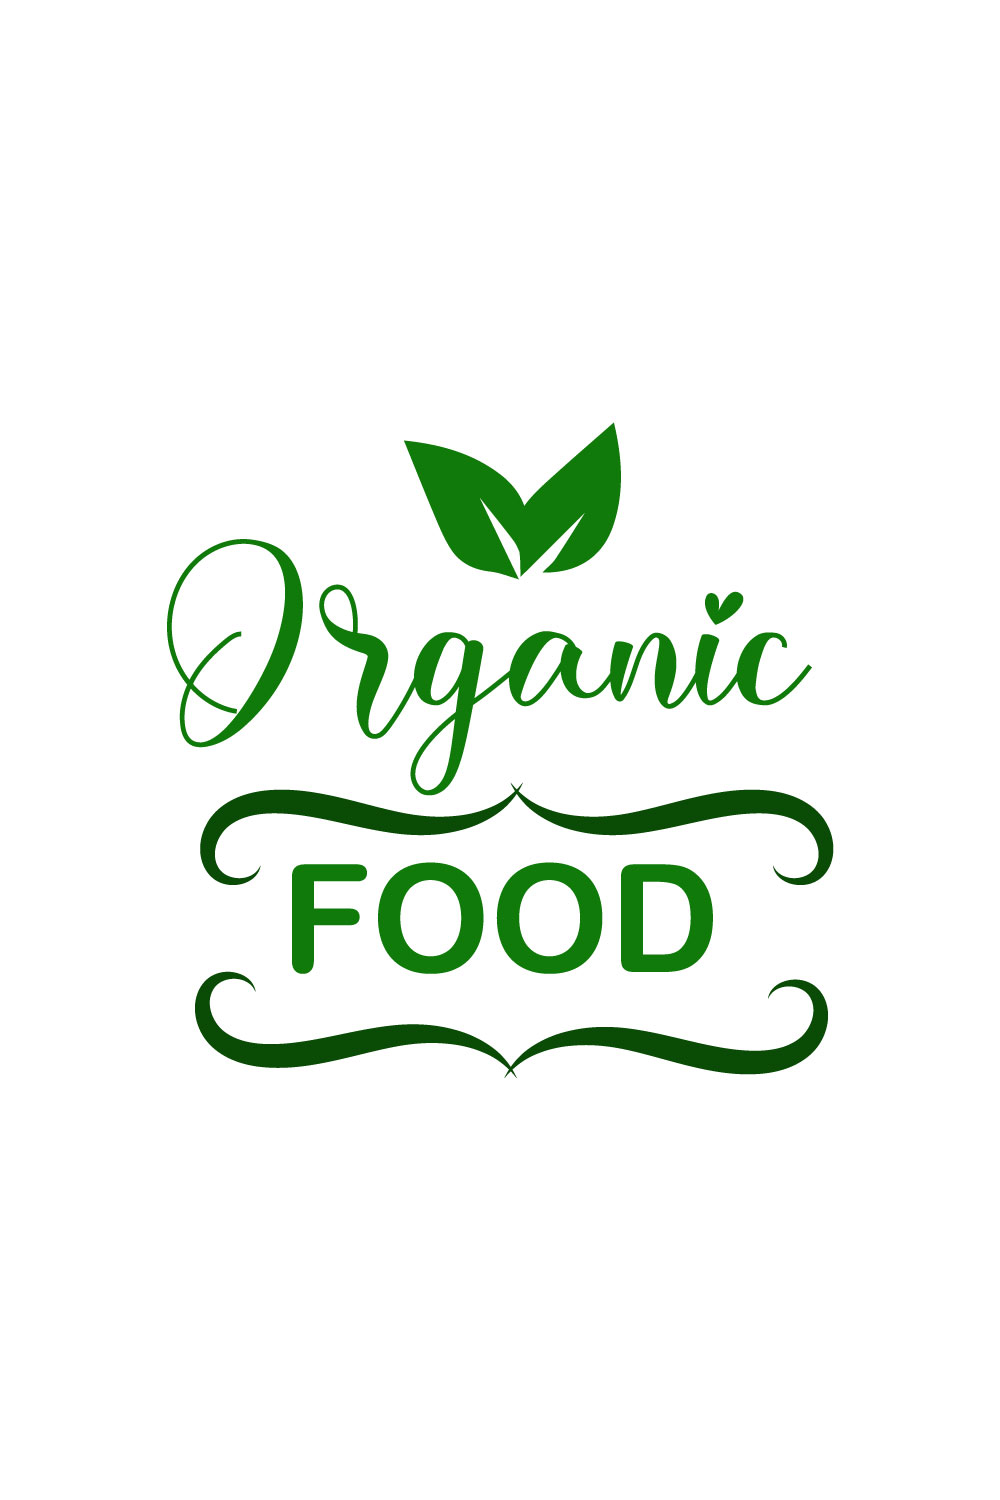 Free Organic food logo pinterest preview image.